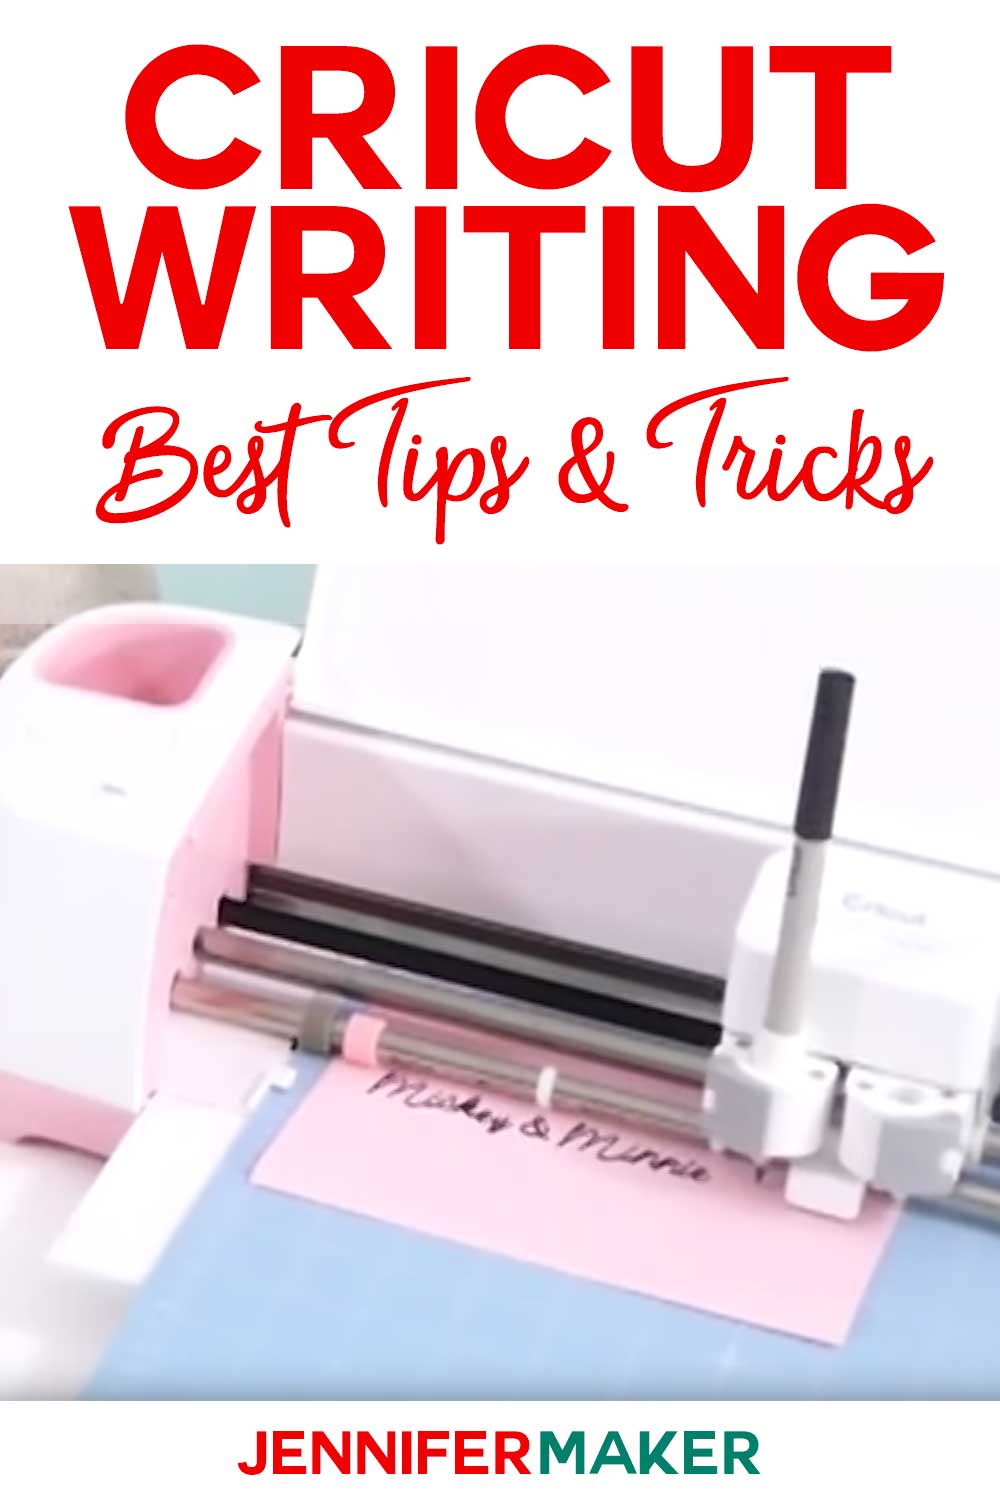 cricut-writing-and-pen-tutorial-tips-and-tricks-jennifer-maker